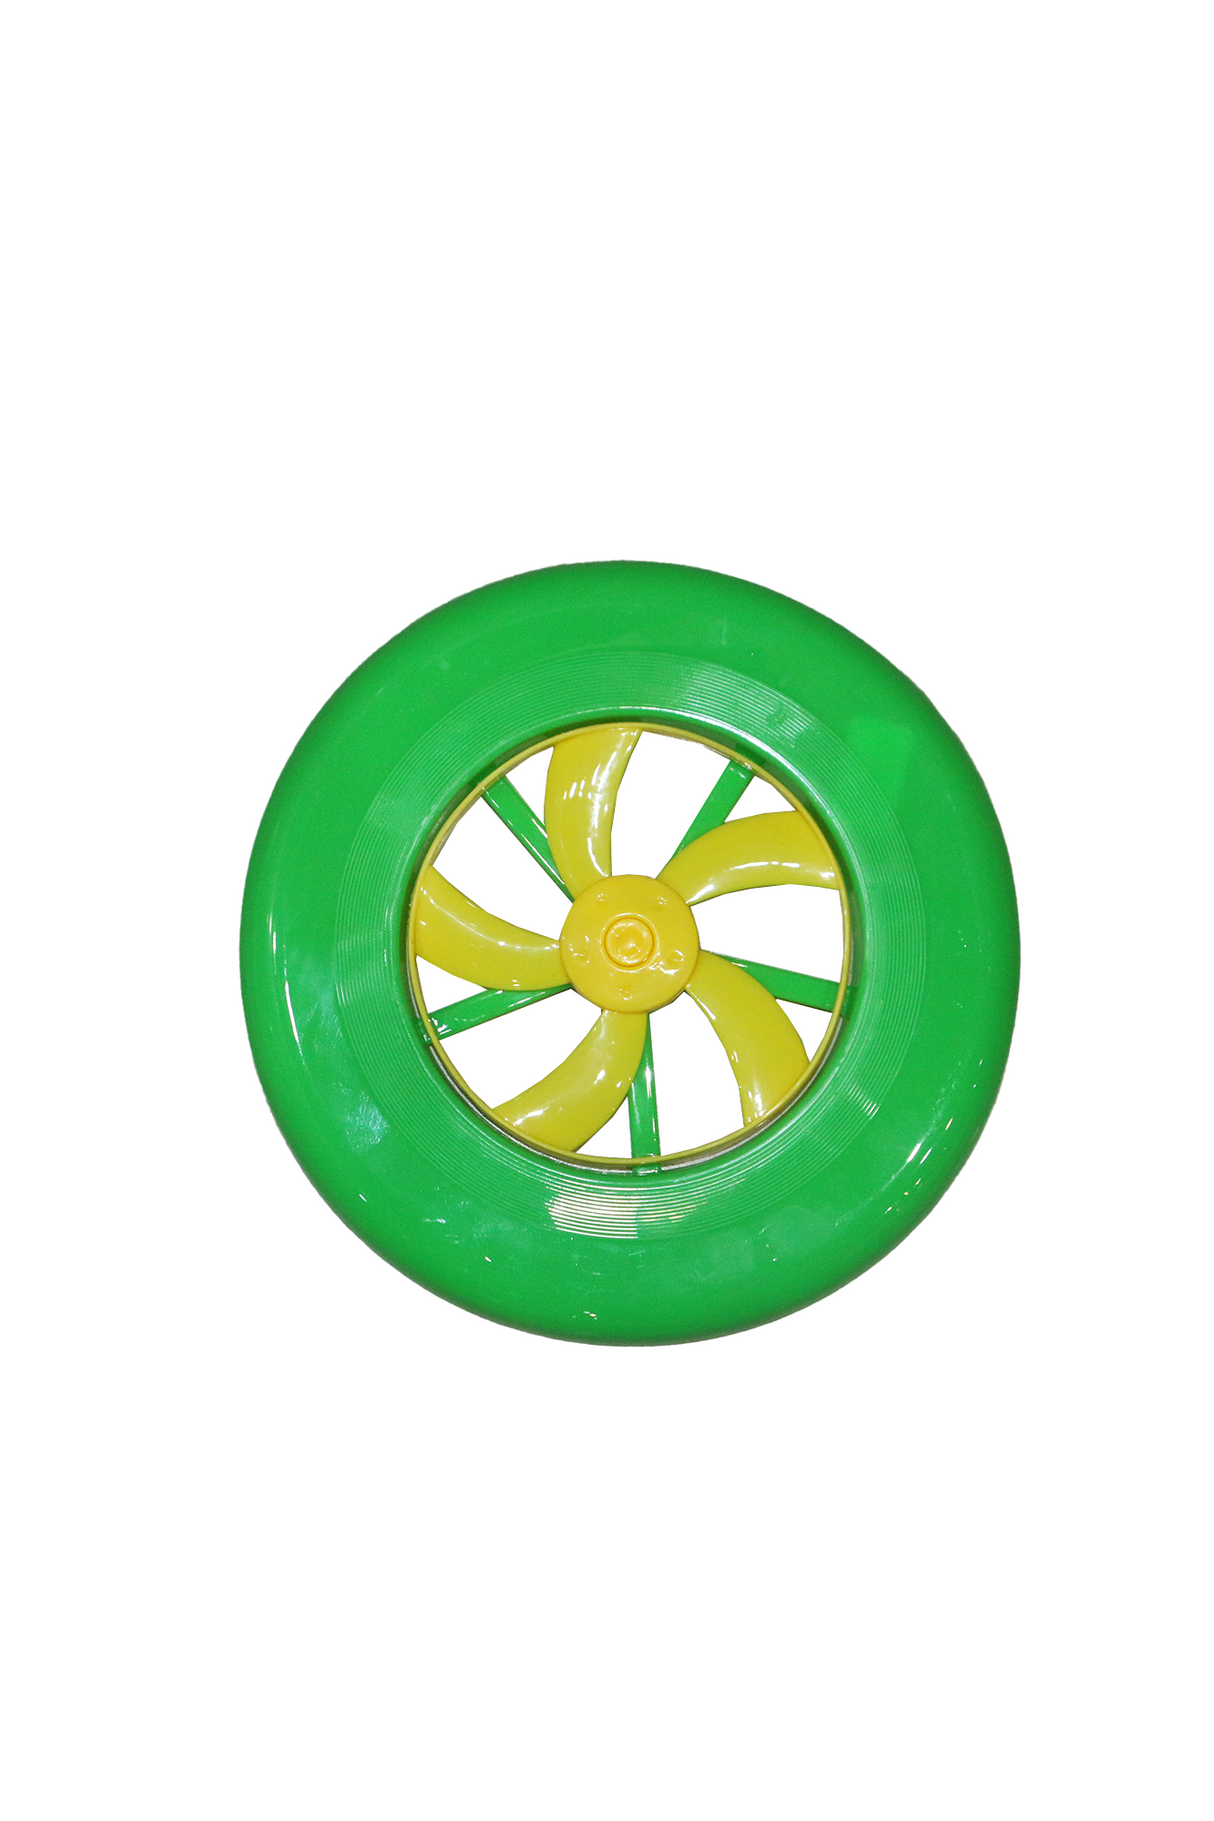 frisbee 270-247 china